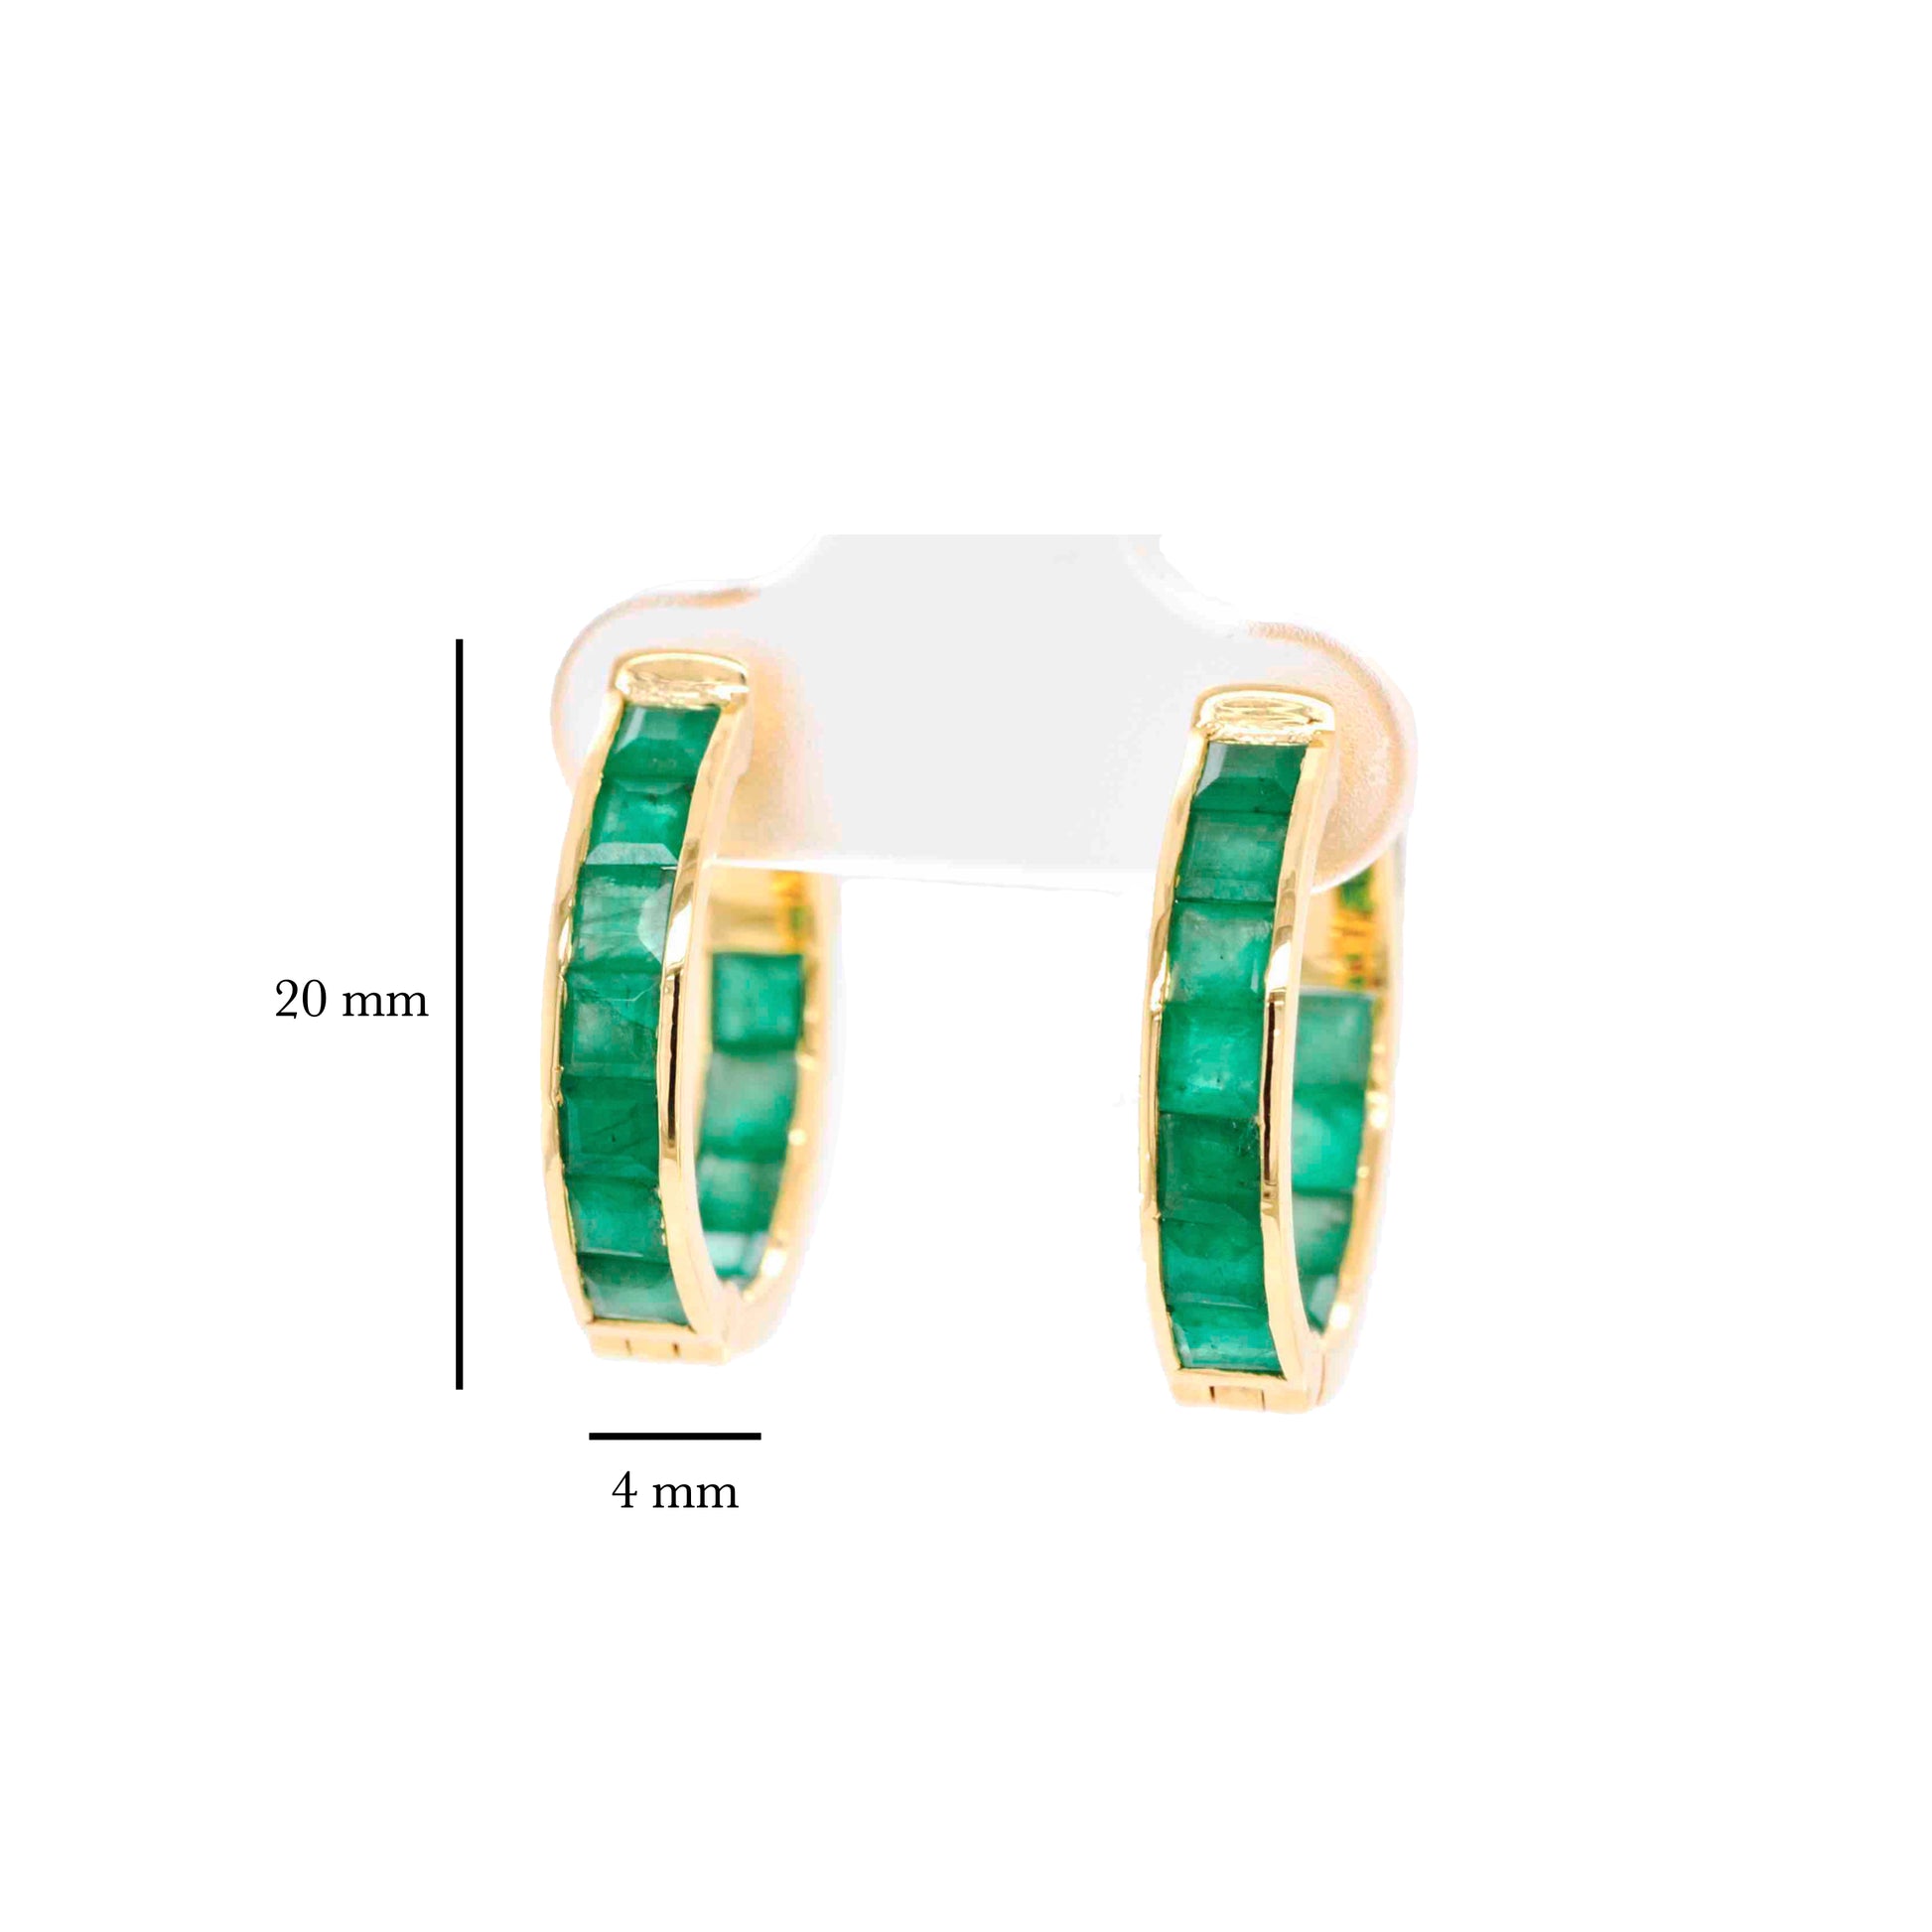 18k Gold Classic Square-Cut Emerald Hoop Earrings - Vaibhav Dhadda Jewelry